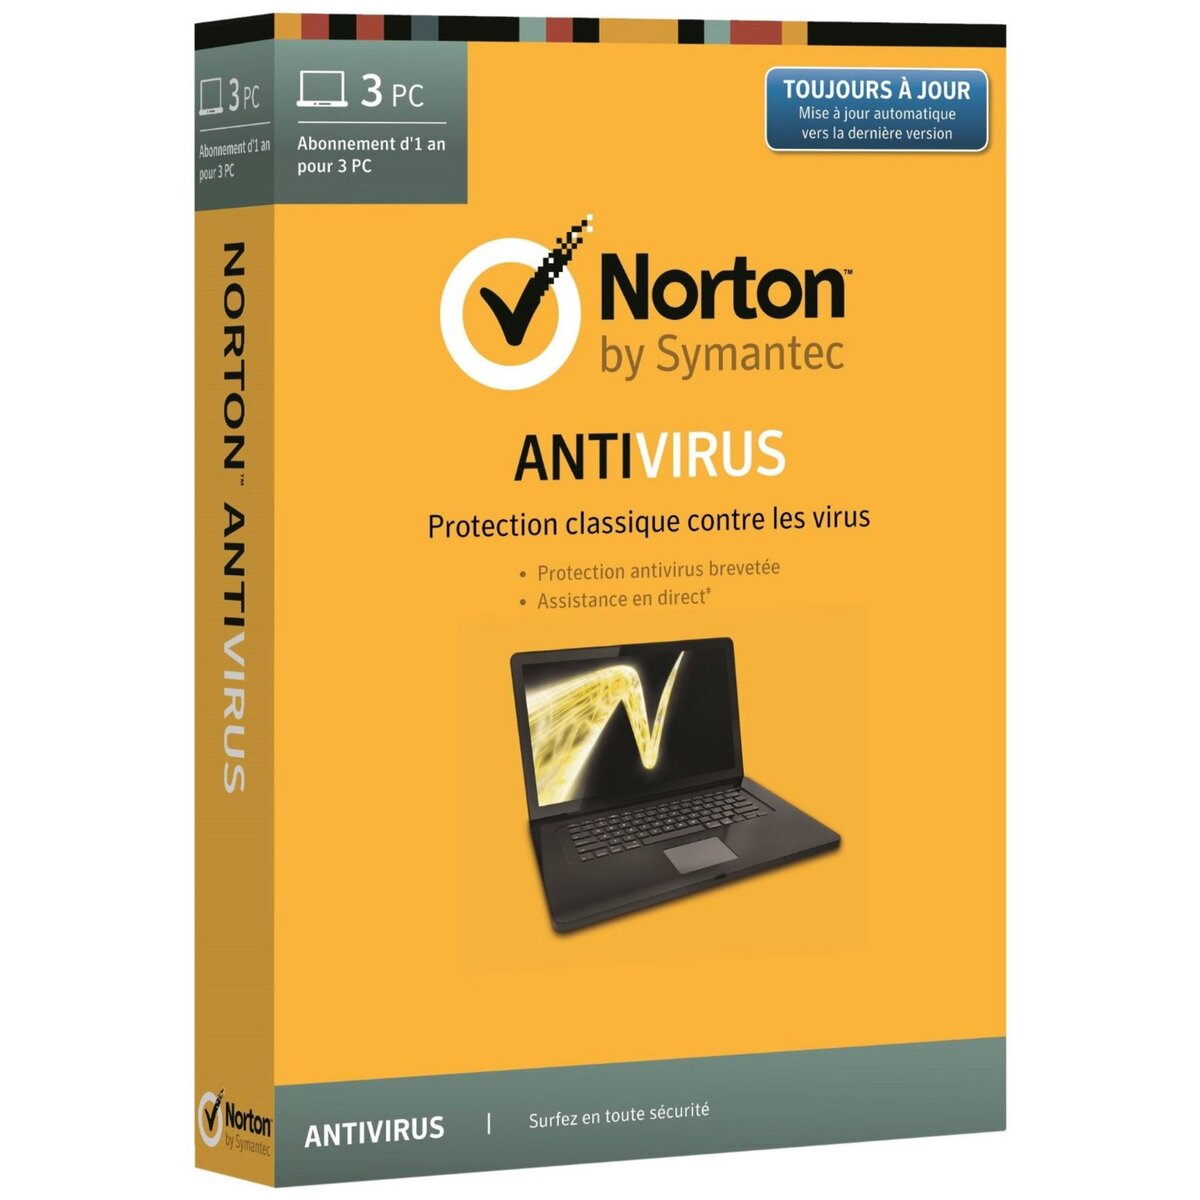 Norton : Antivirus 2014